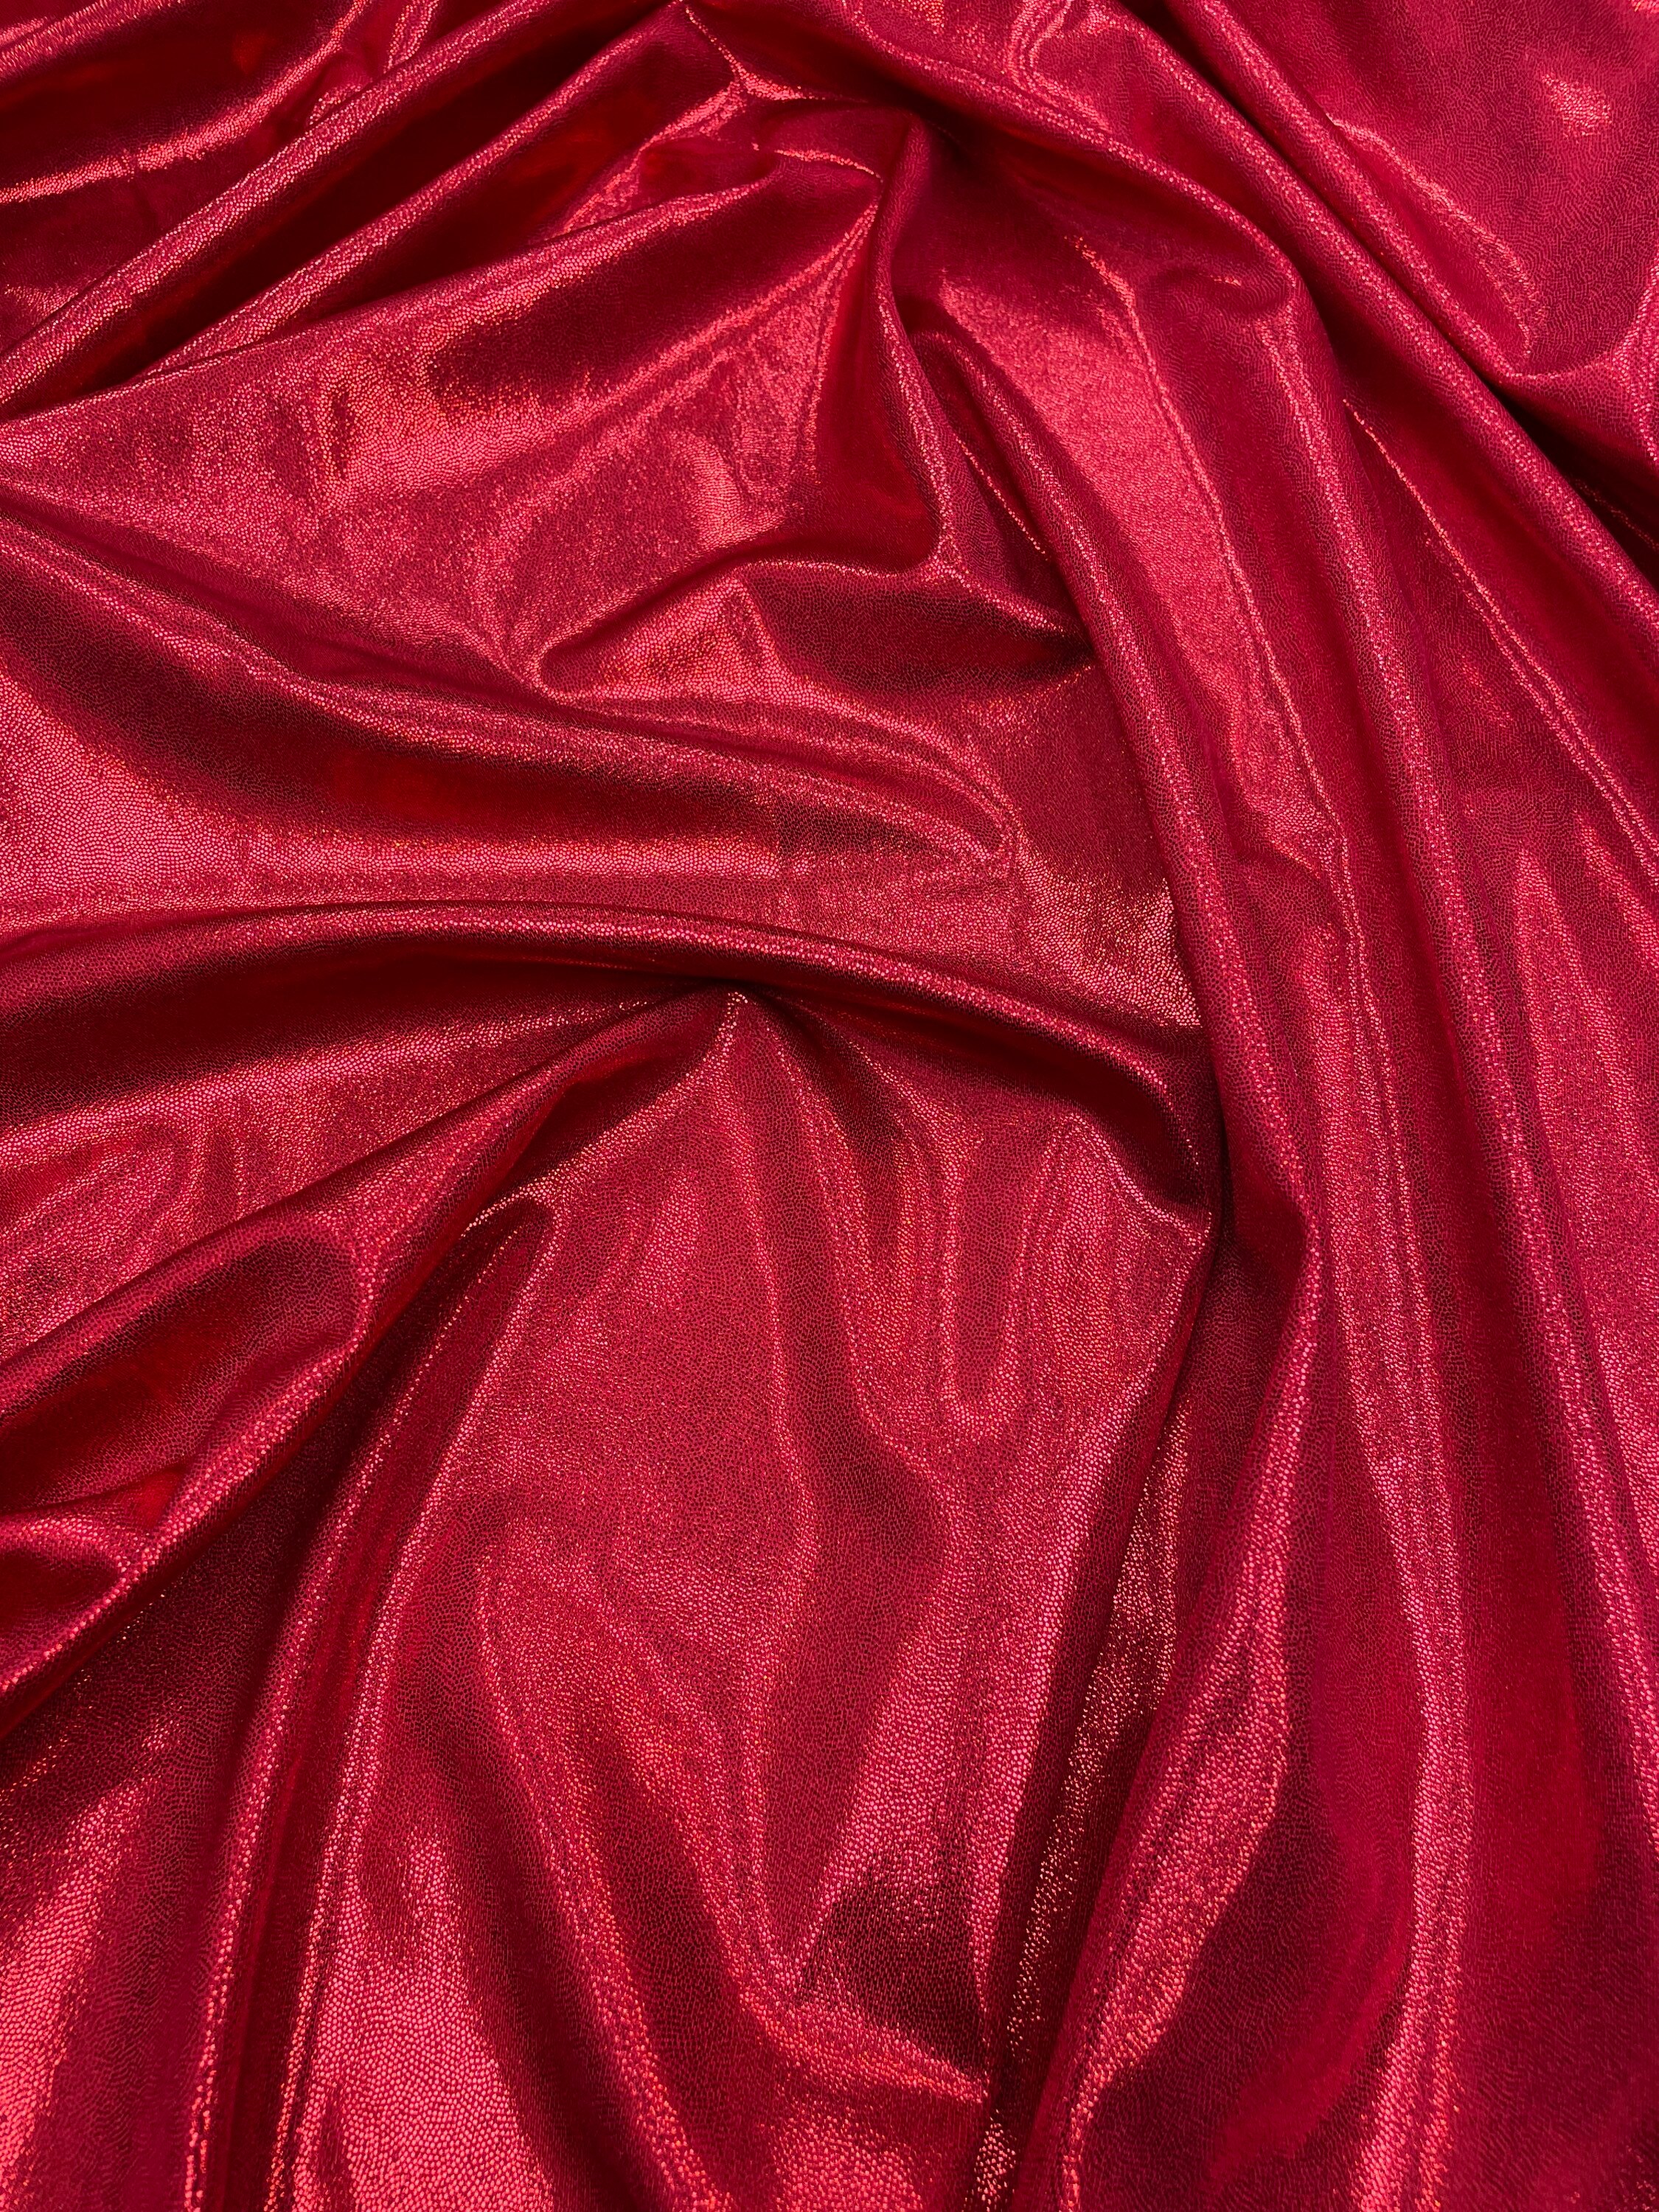 Red Metallic Foggy Foil Nylon Spandex 4 Way Stretch Fabric Sold by